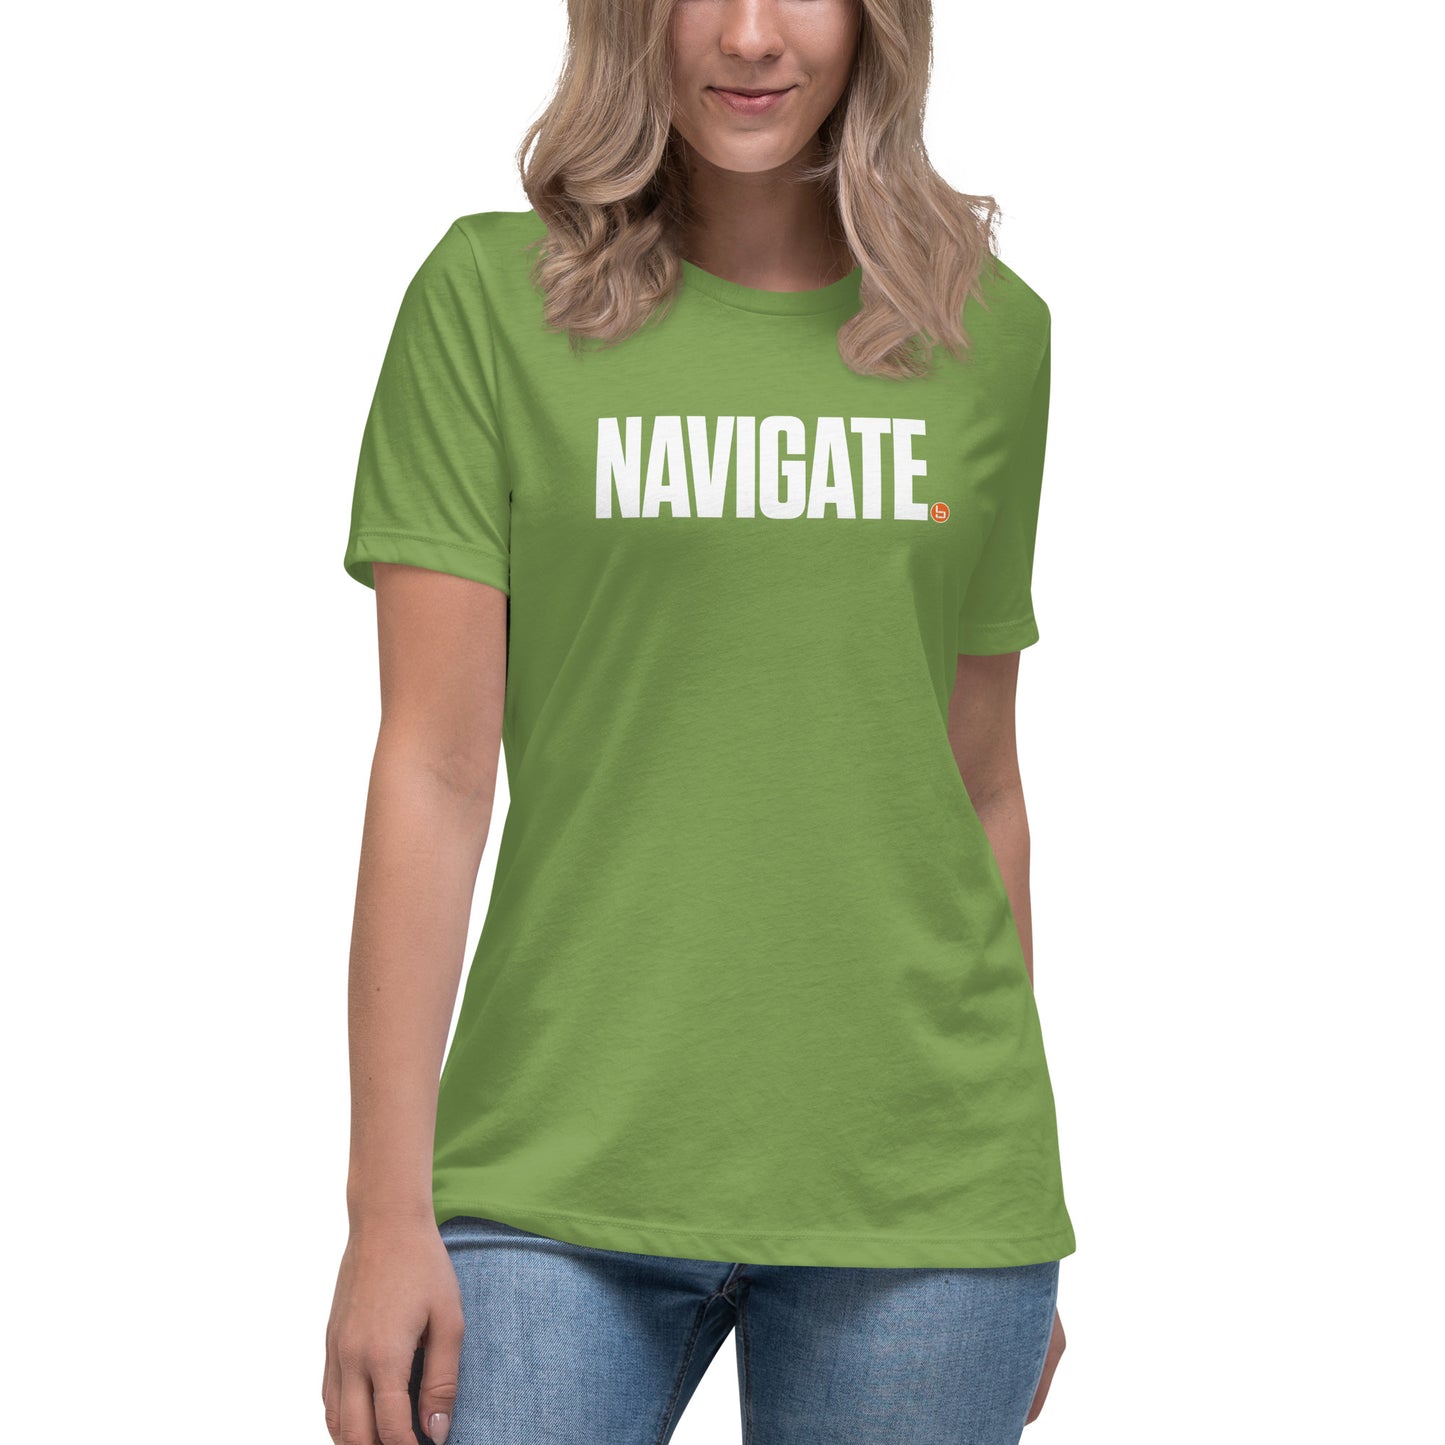 NAVIGATE - Women's Relaxed T-Shirt - White Logo